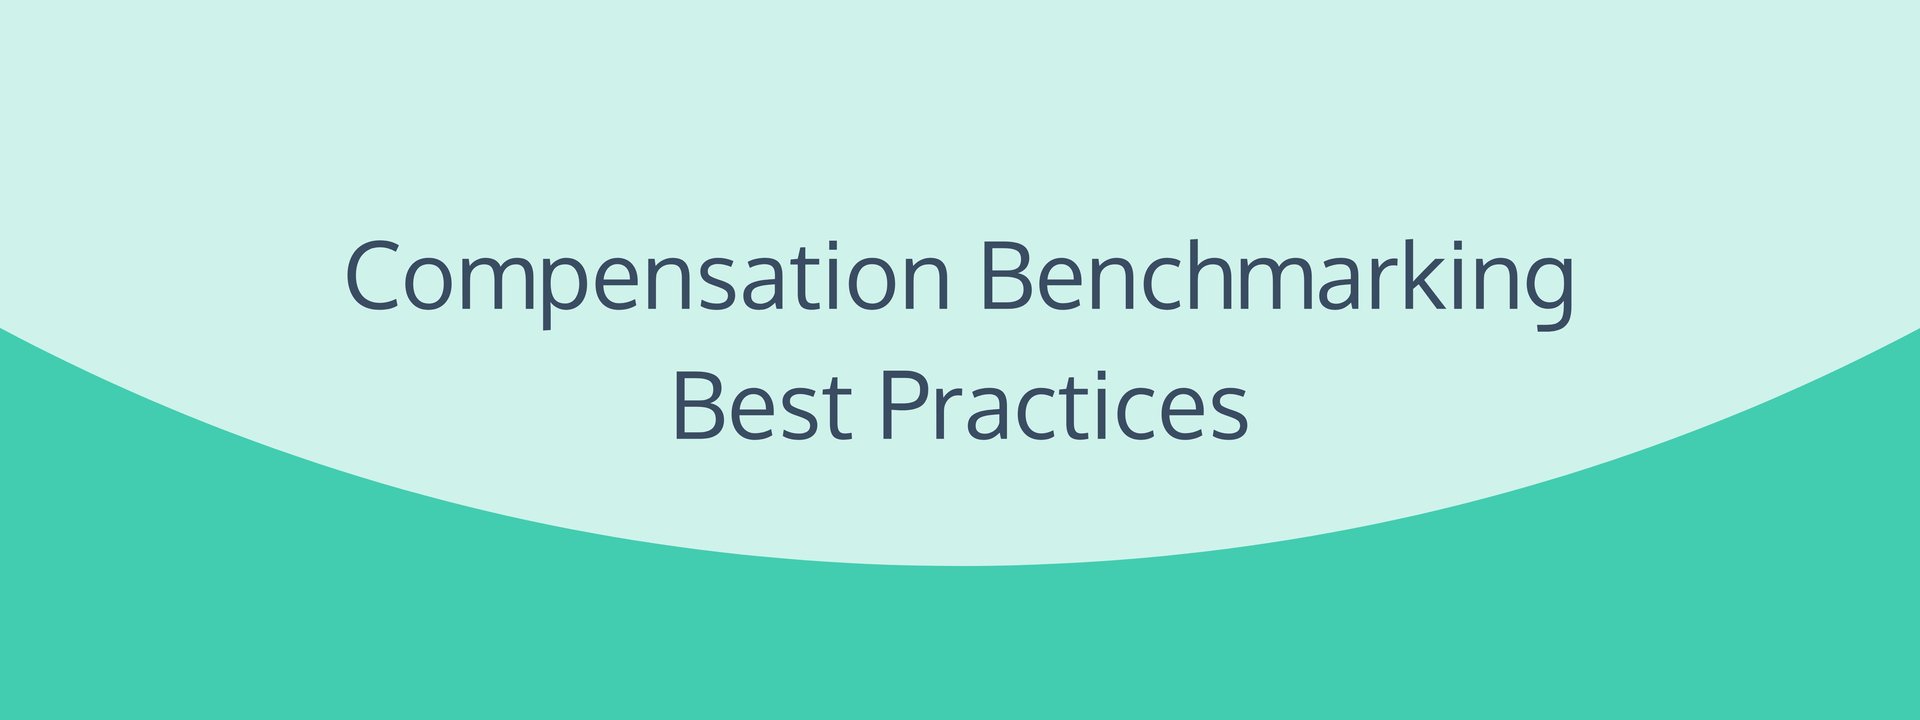 Compensation Benchmarking Best Practices